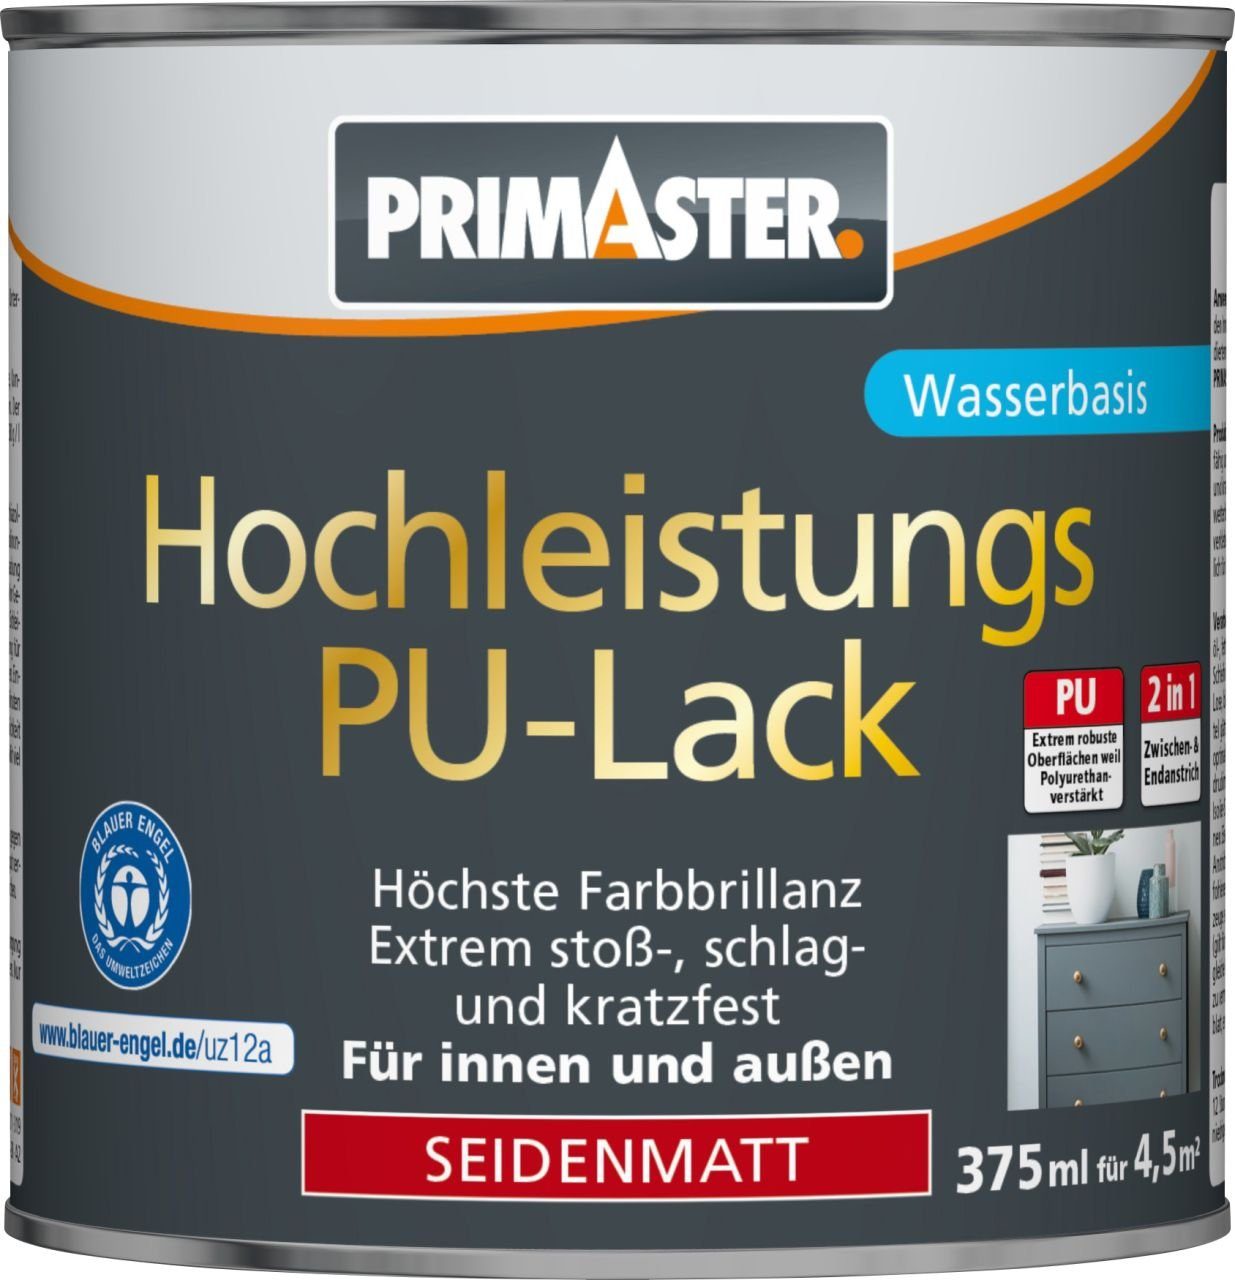 ml Acryl-Buntlack 8017 Primaster 375 Primaster Hochleistungs-PU-Lack RAL